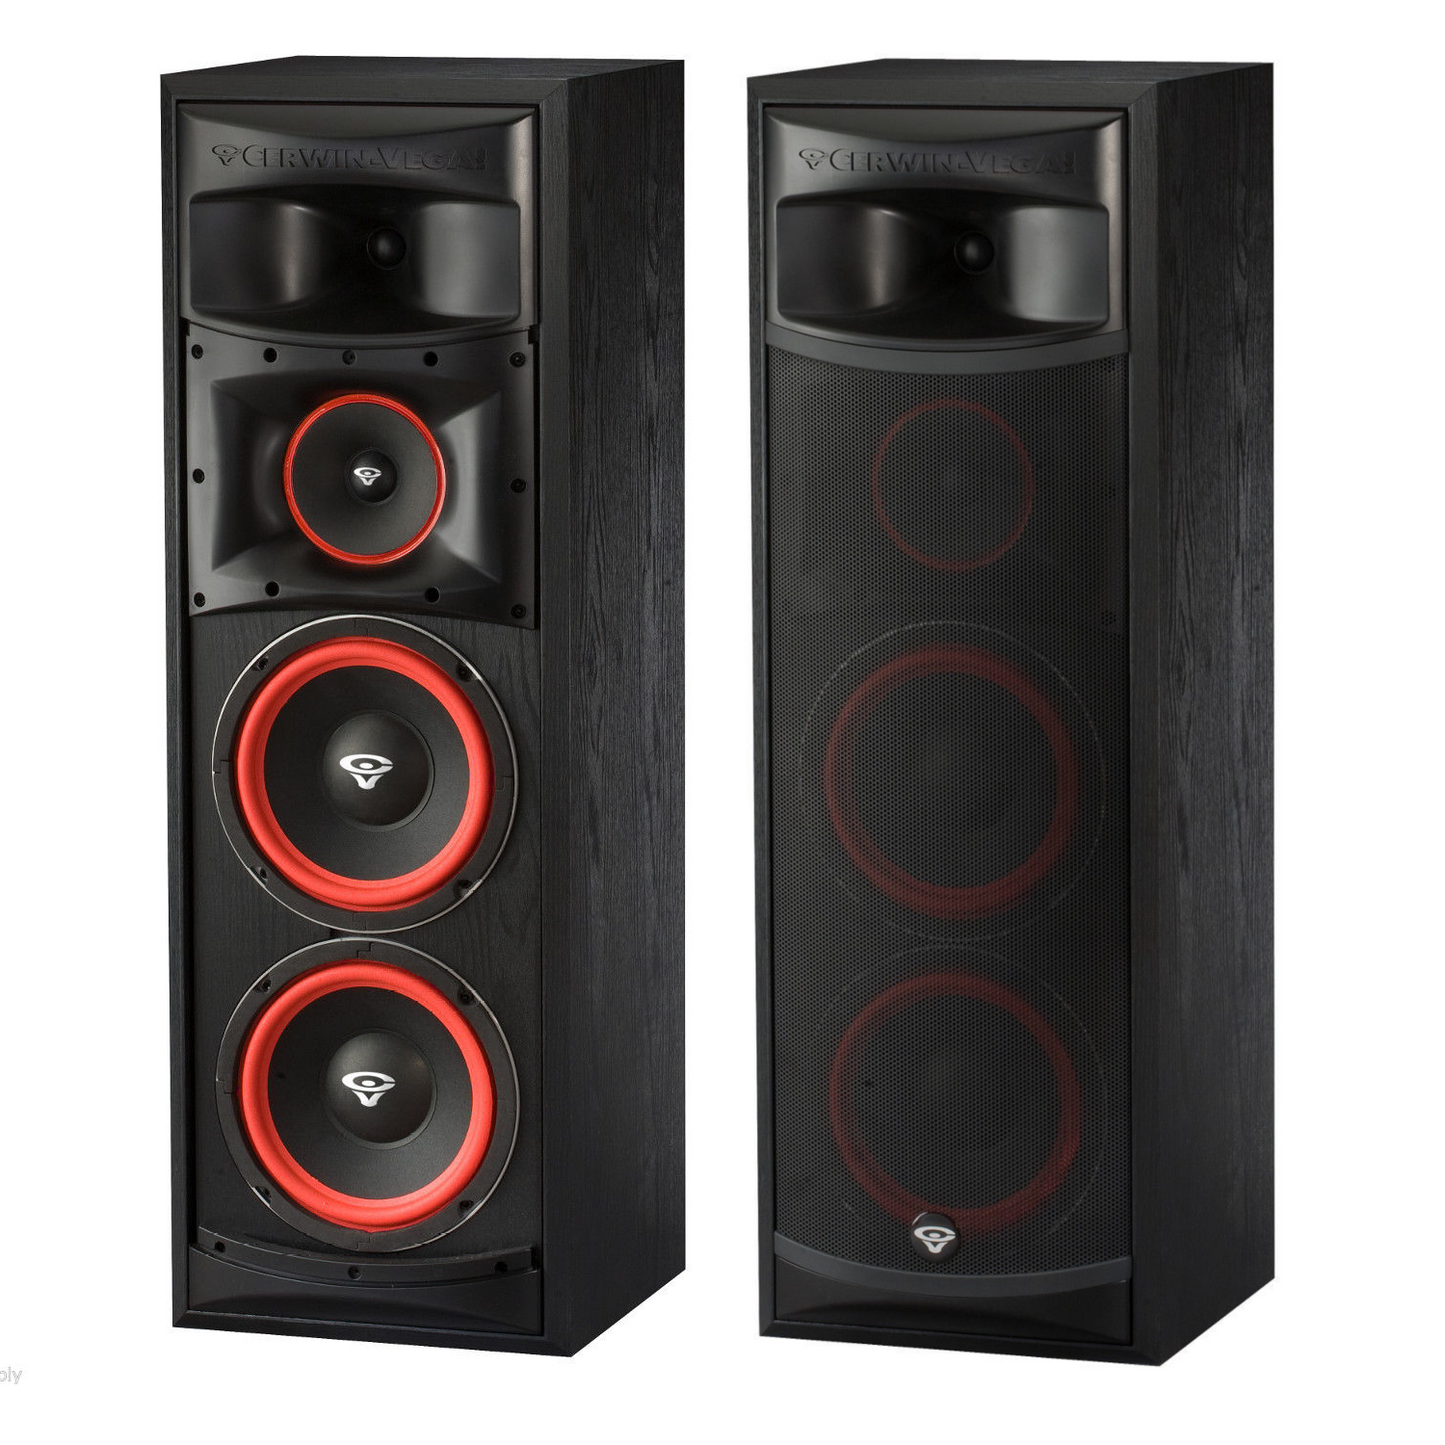 Cerwin Vega XLS-28 Dual 8" 3 Way Floorstanding Tower Speakers